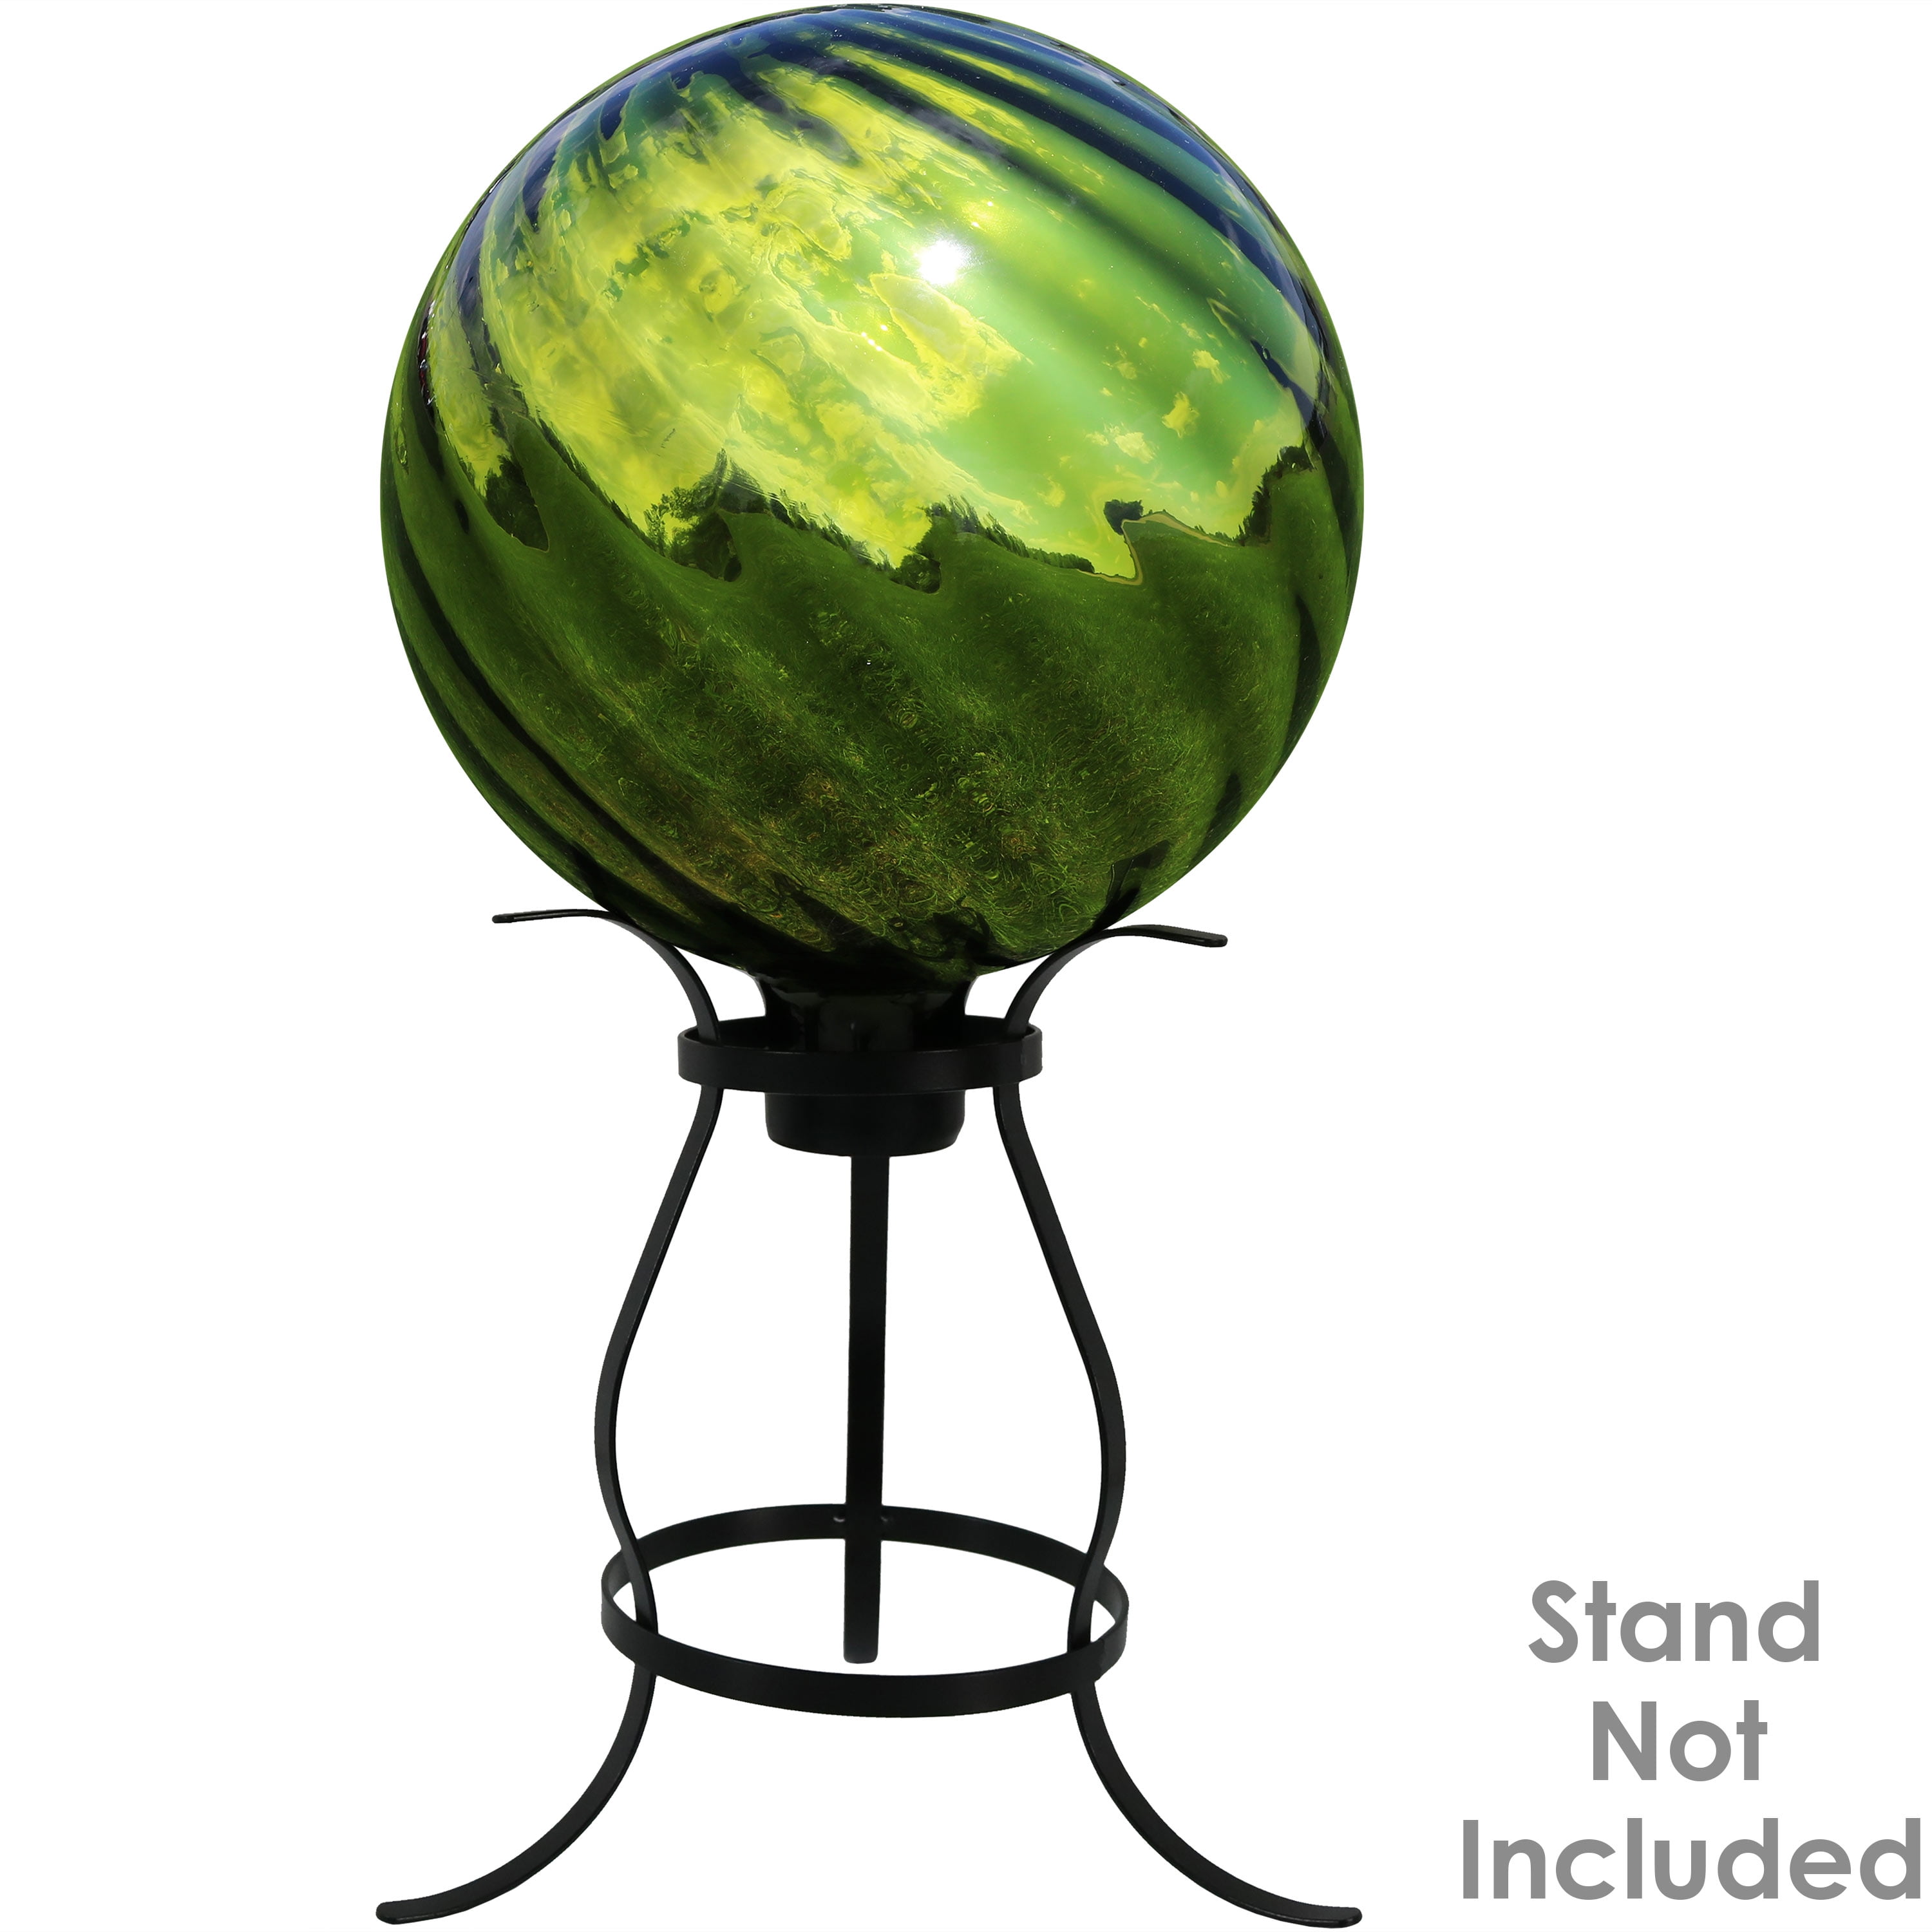 Outdoor Lawn and Yard Ornament Set of 2 10 Inch Green Sunnydaze Mosaic Gazing Globe Glass Garden Ball